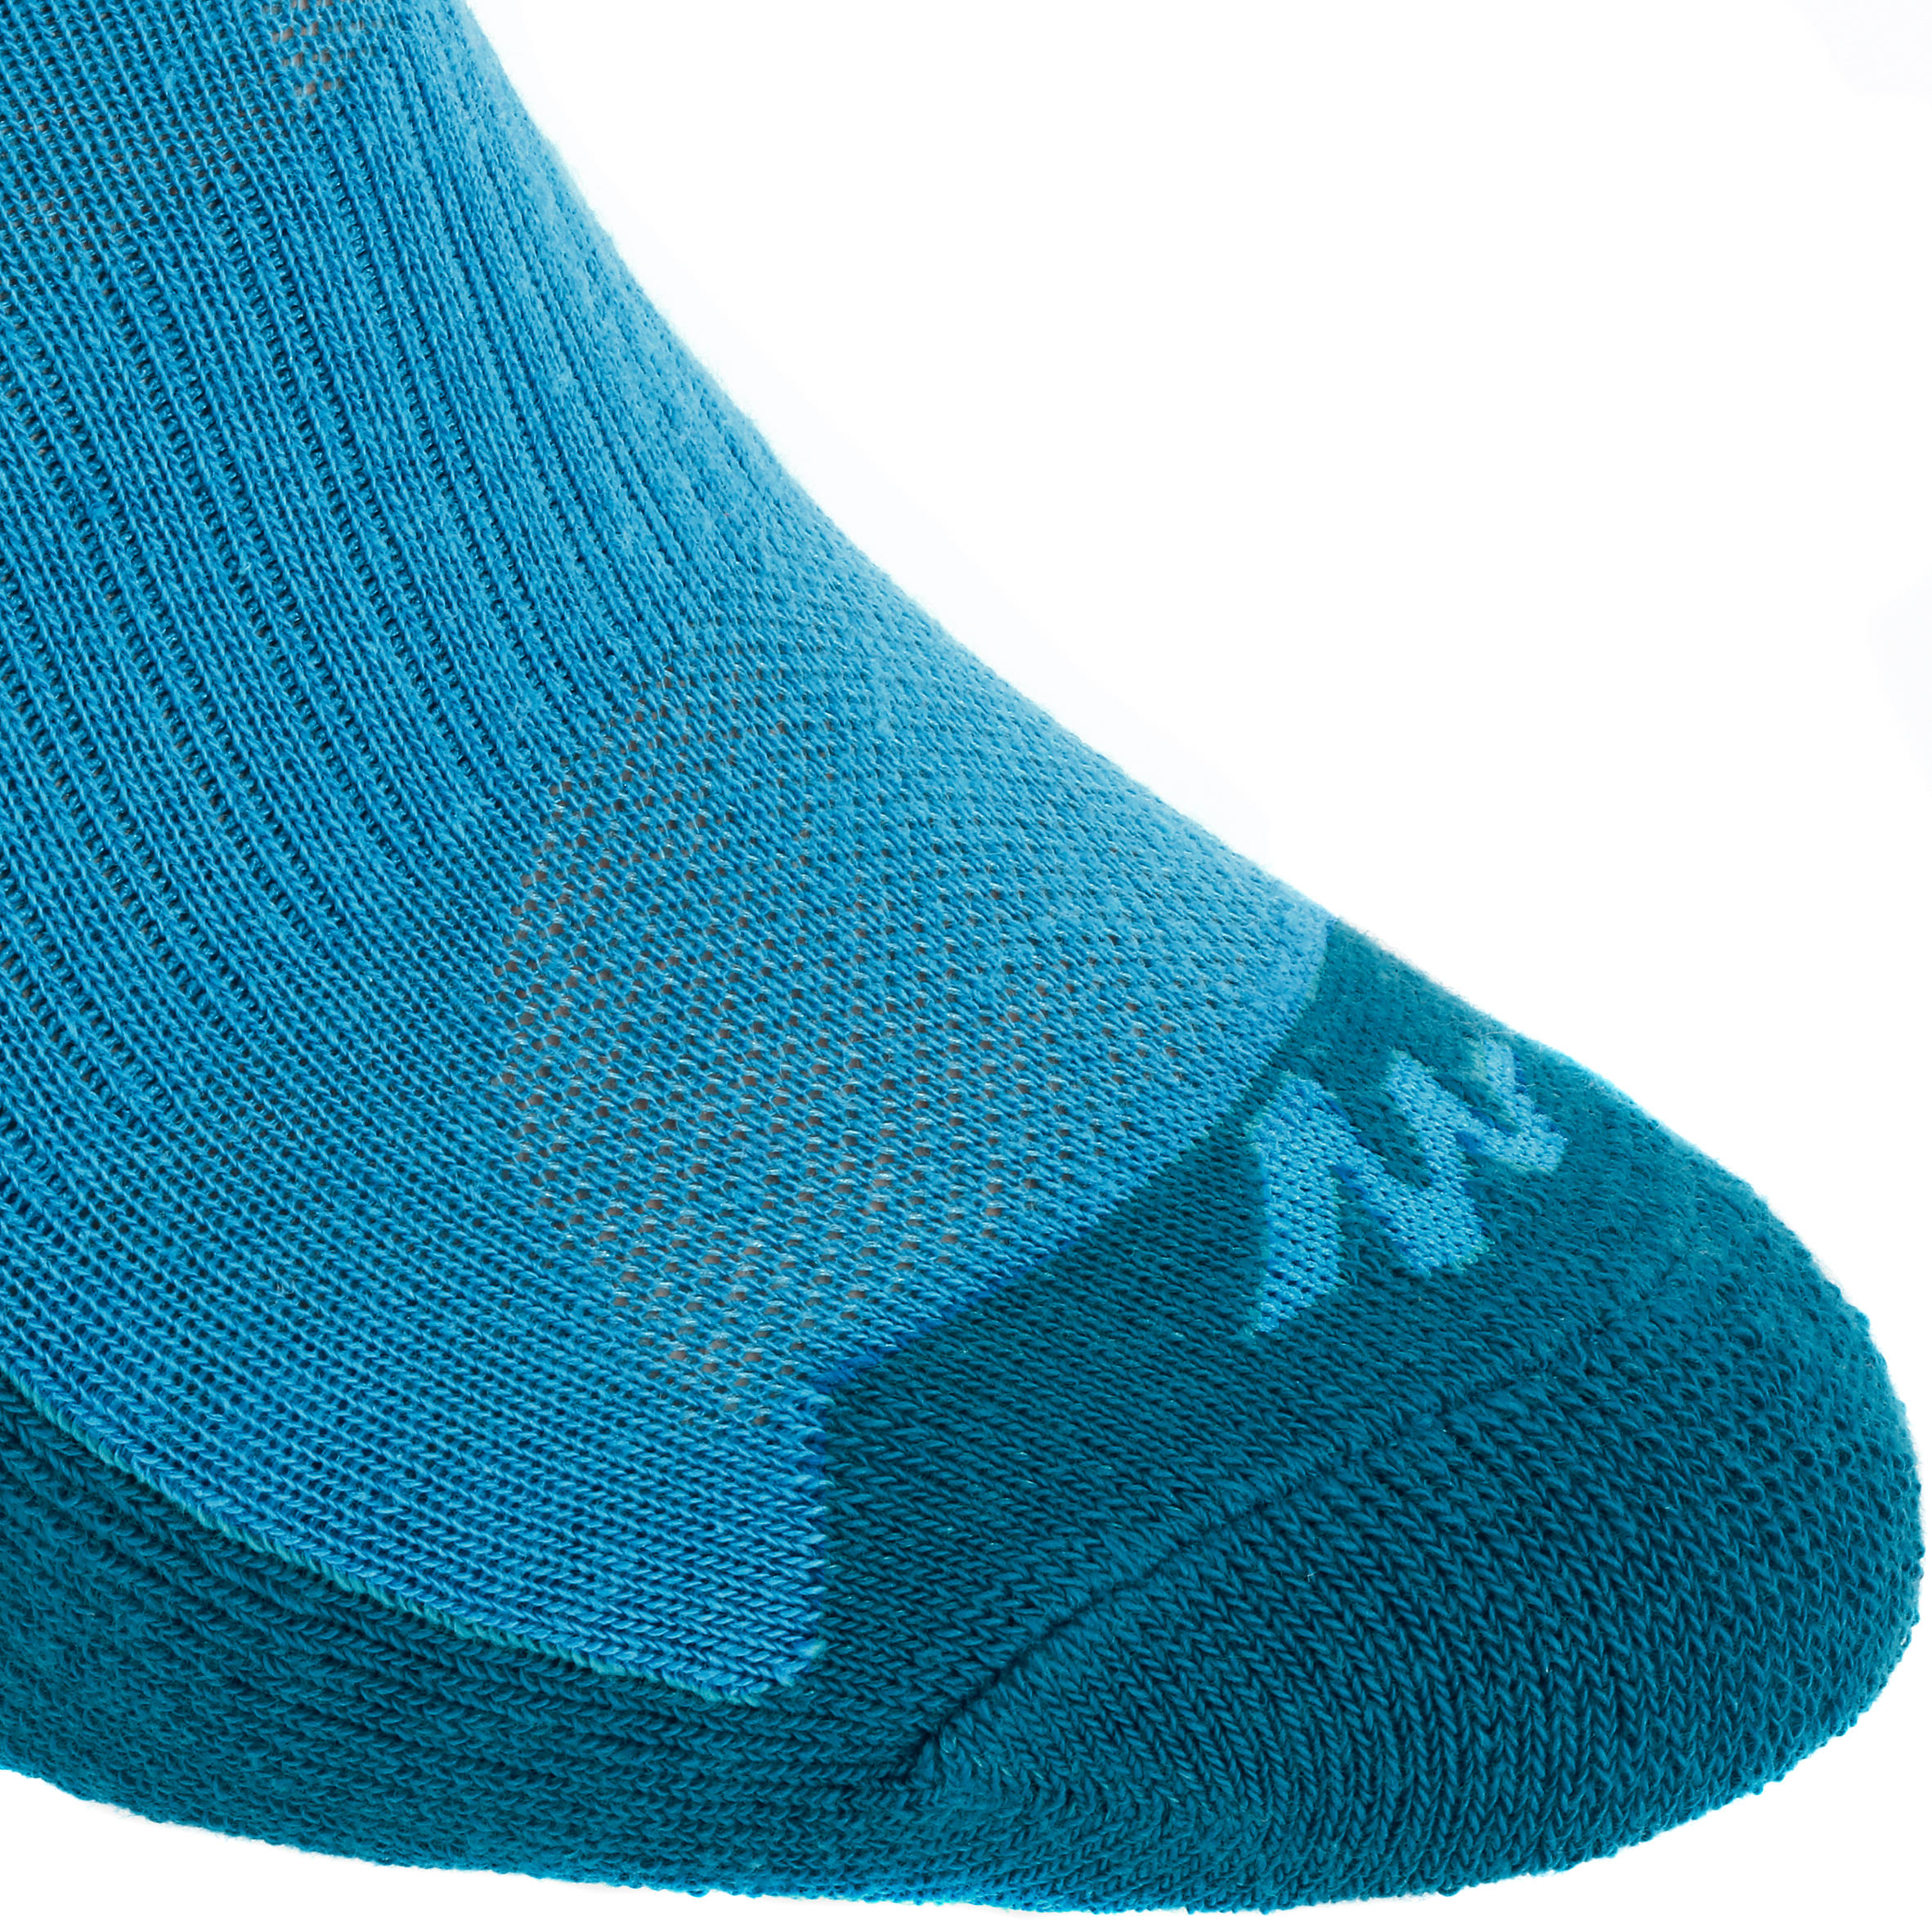 Country walking Mid socks NH 100 X 2 pairs - Blue 4/6